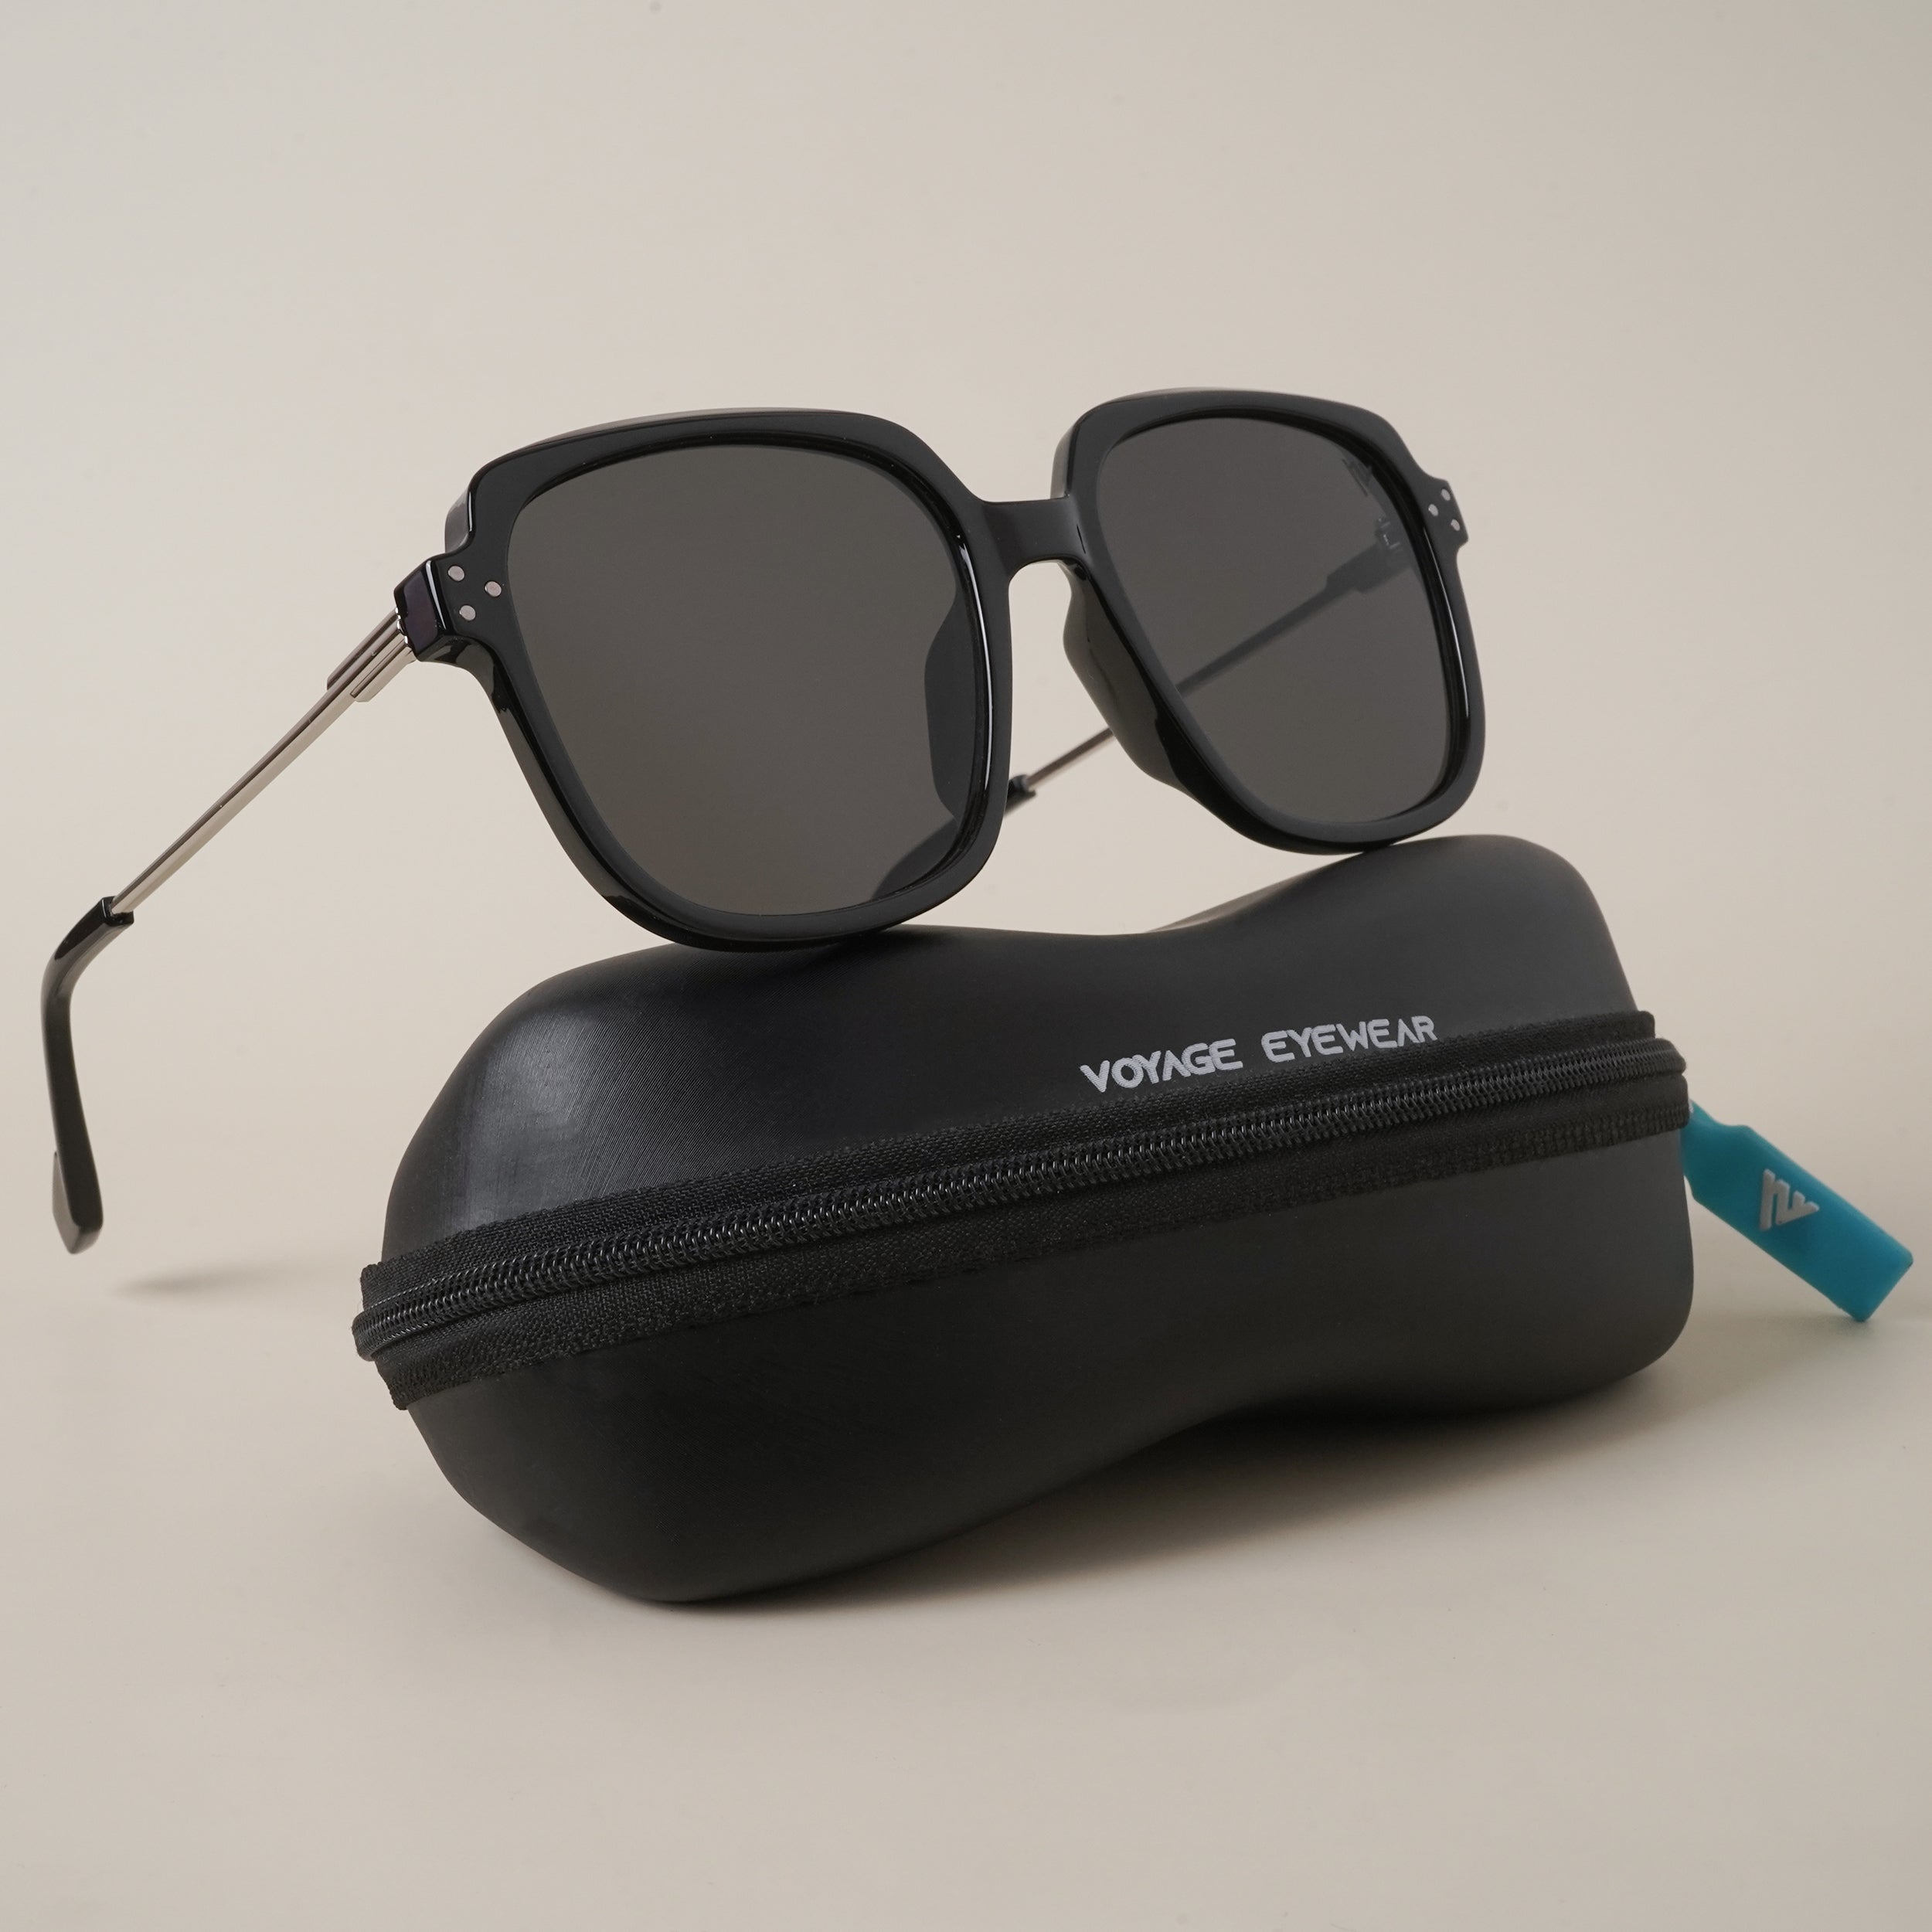 Voyage Black Square Sunglasses MG3692